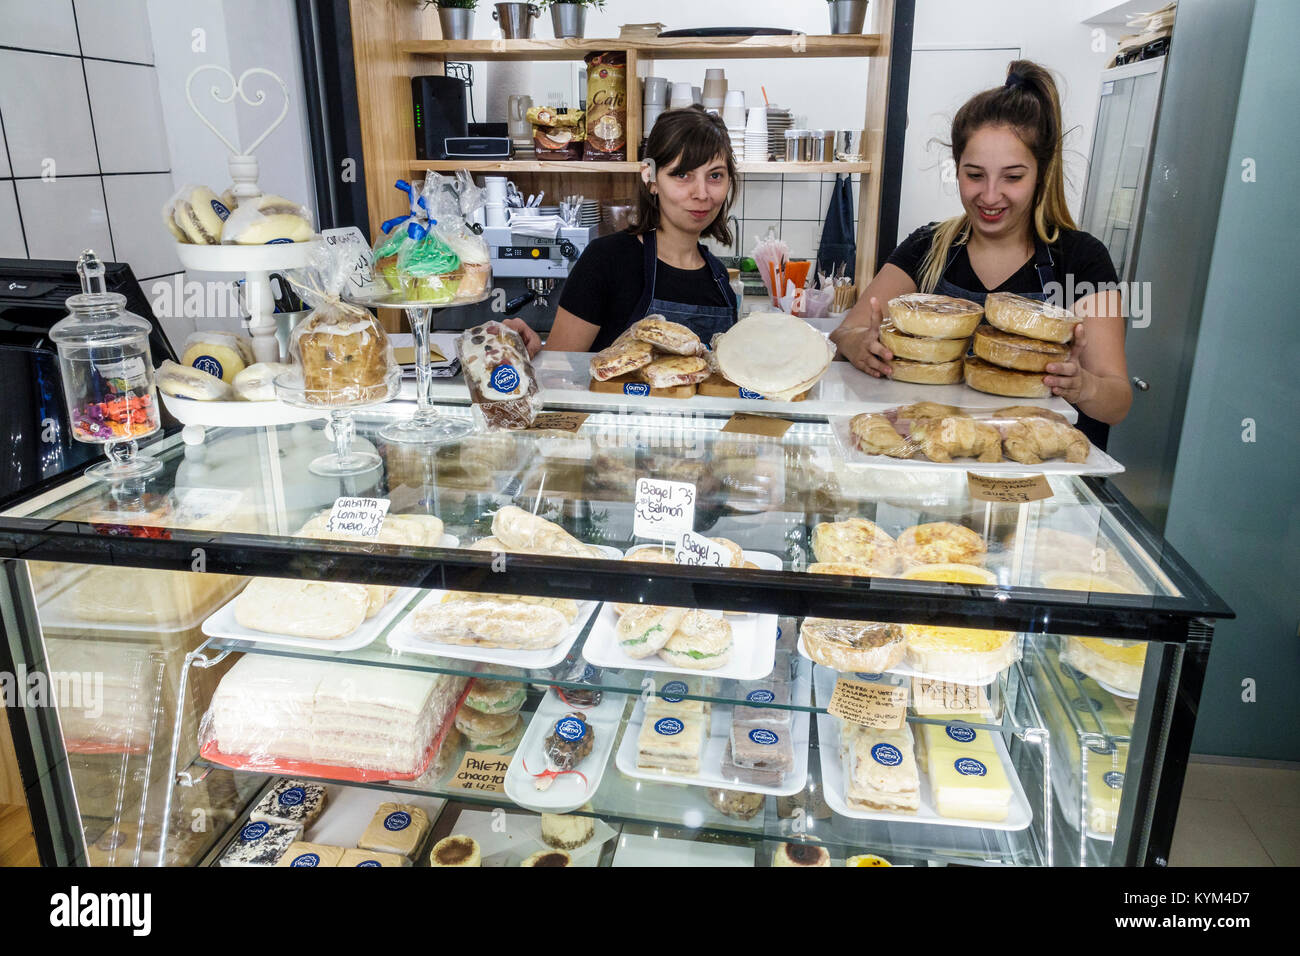 Buenos Aires Argentina,Palermo,Quma Catering & Pasteleria bakery,inside,Hispanic,woman female women,employee,sandwiches,croissants,working,arranging d Stock Photo